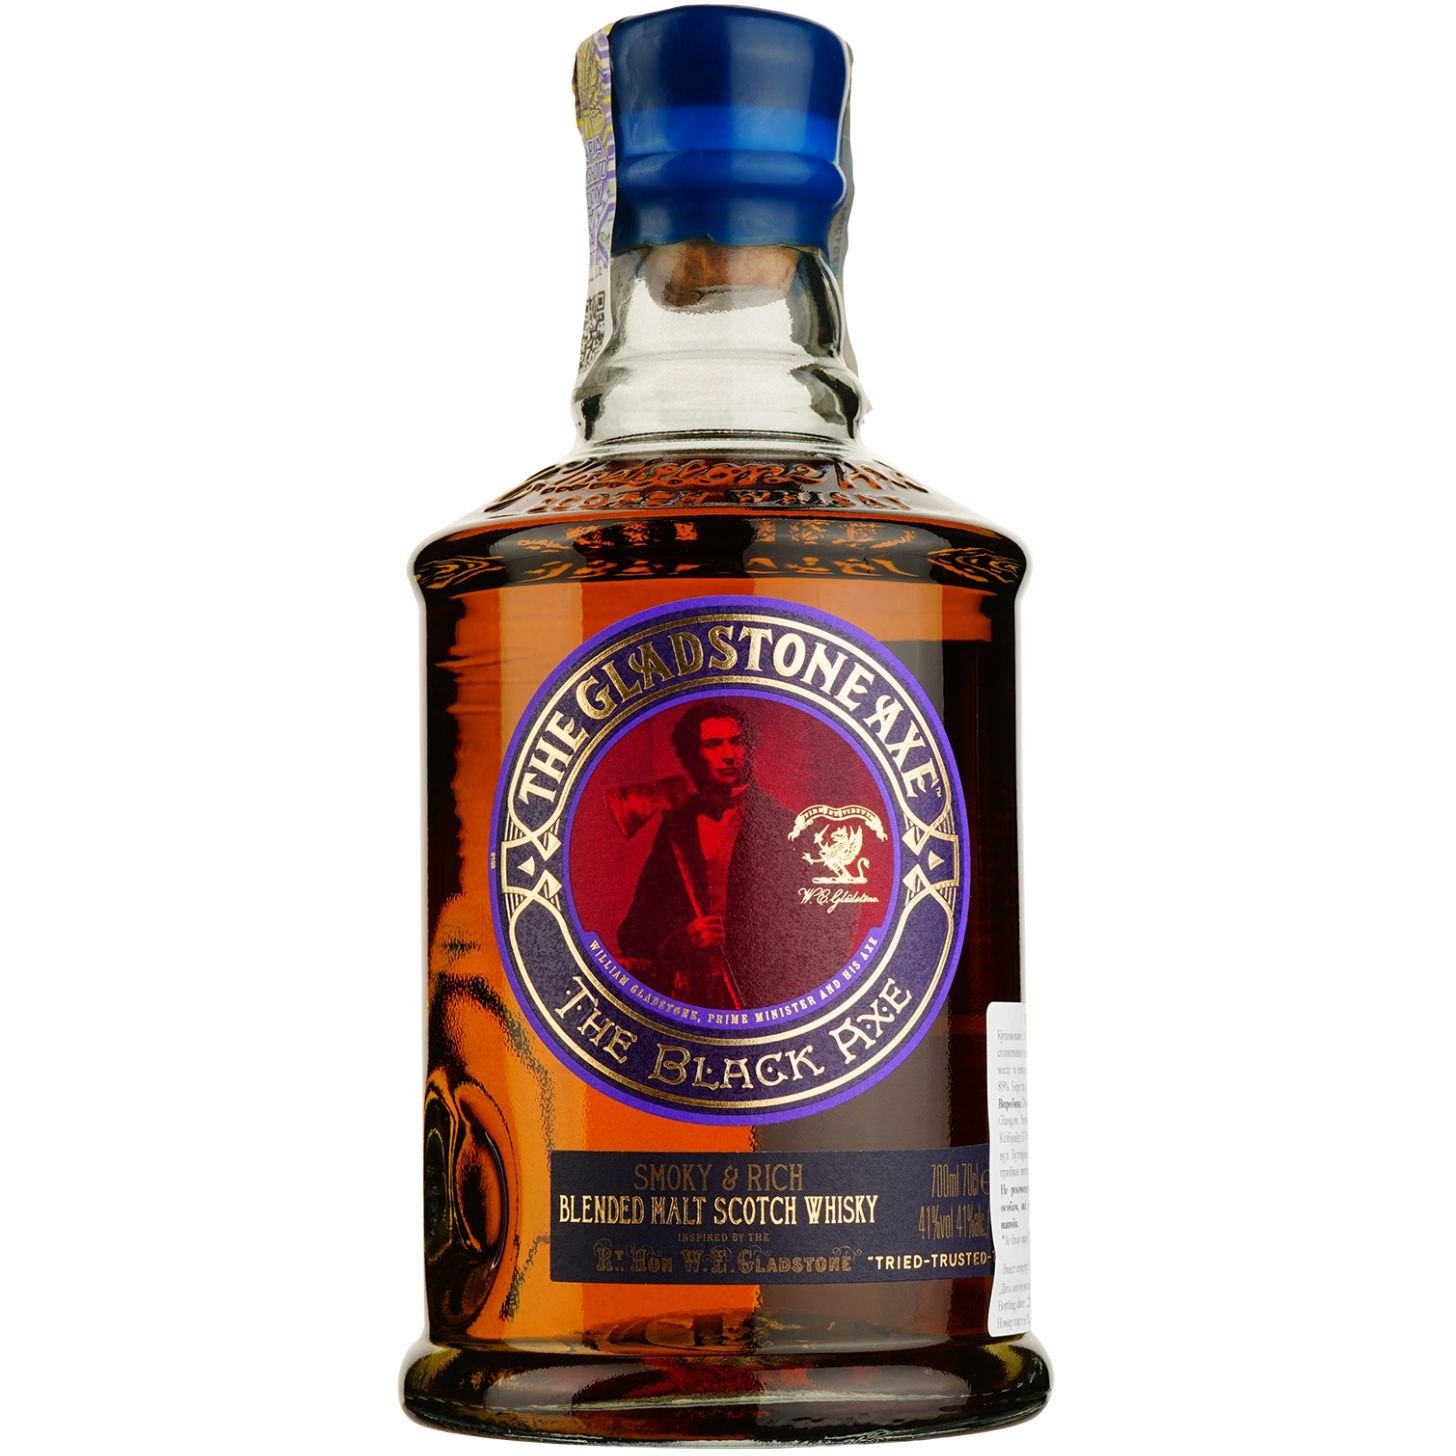 Віскі The Gladstone Axe Black Blended Malt Scotch Whisky, 41%, 0,7 л - фото 1